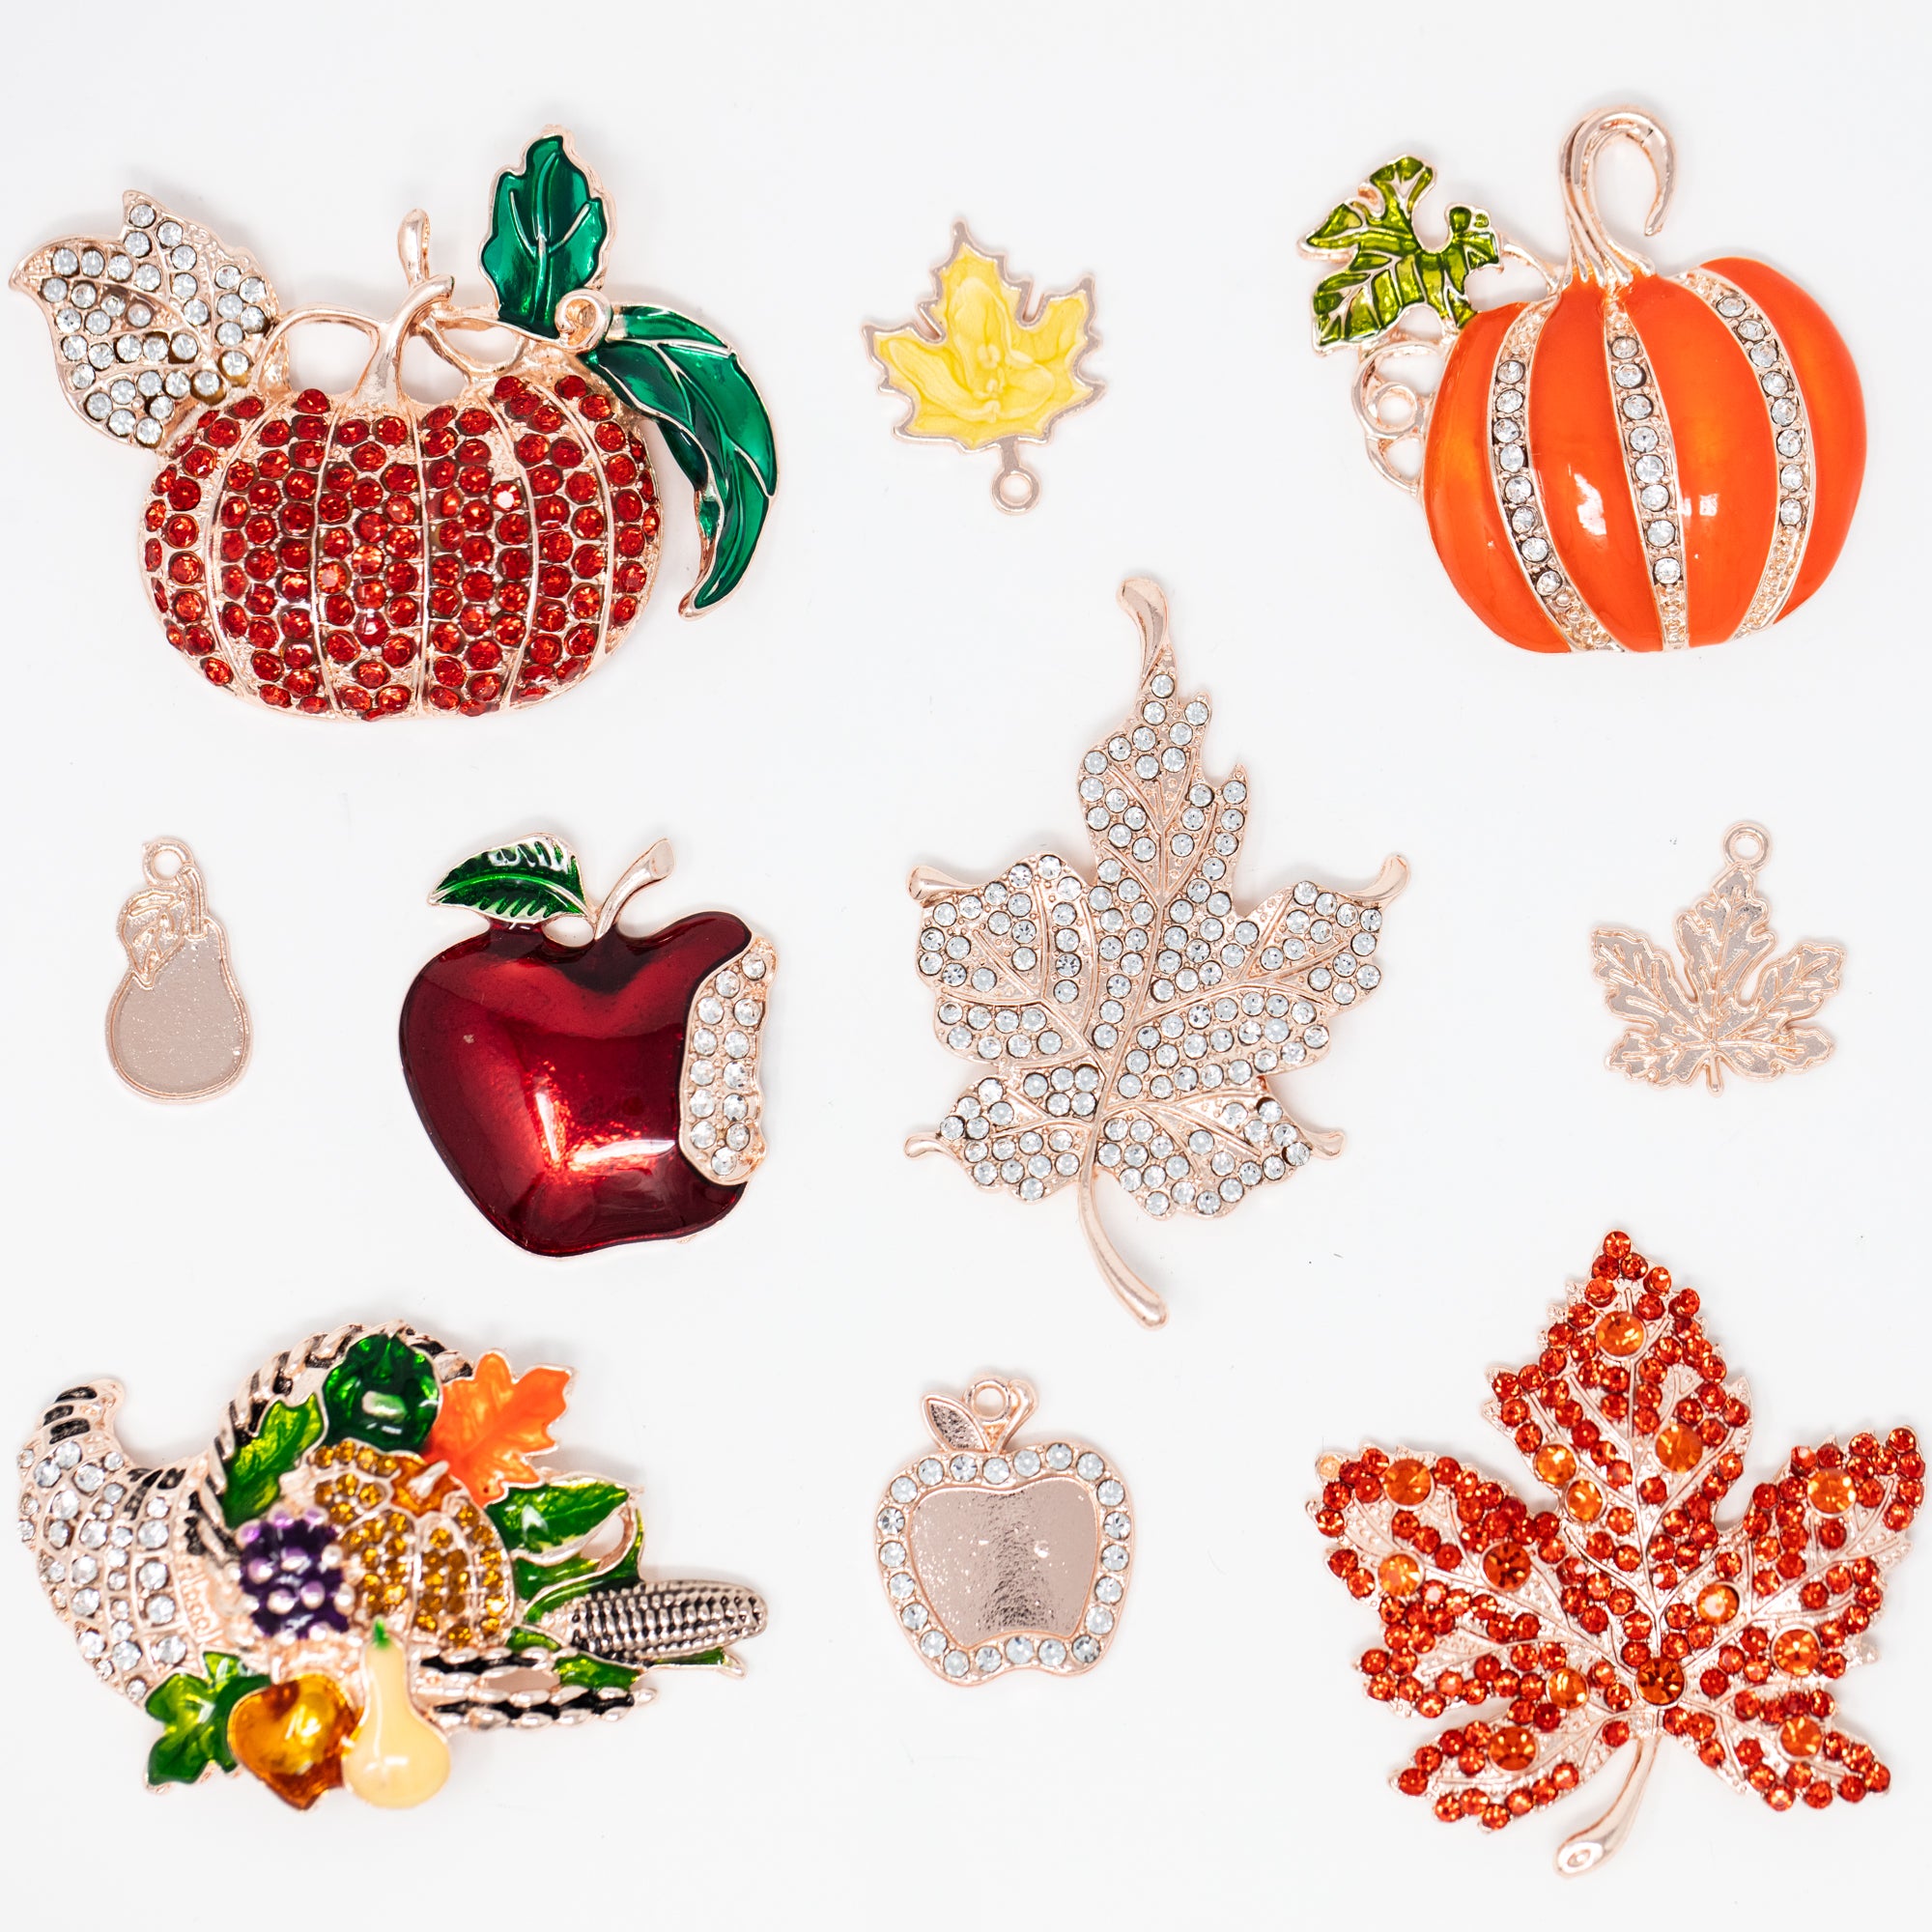 Fall embellishments, Rhinestone leaves, rhinestone pumpkins, rhinestone apples